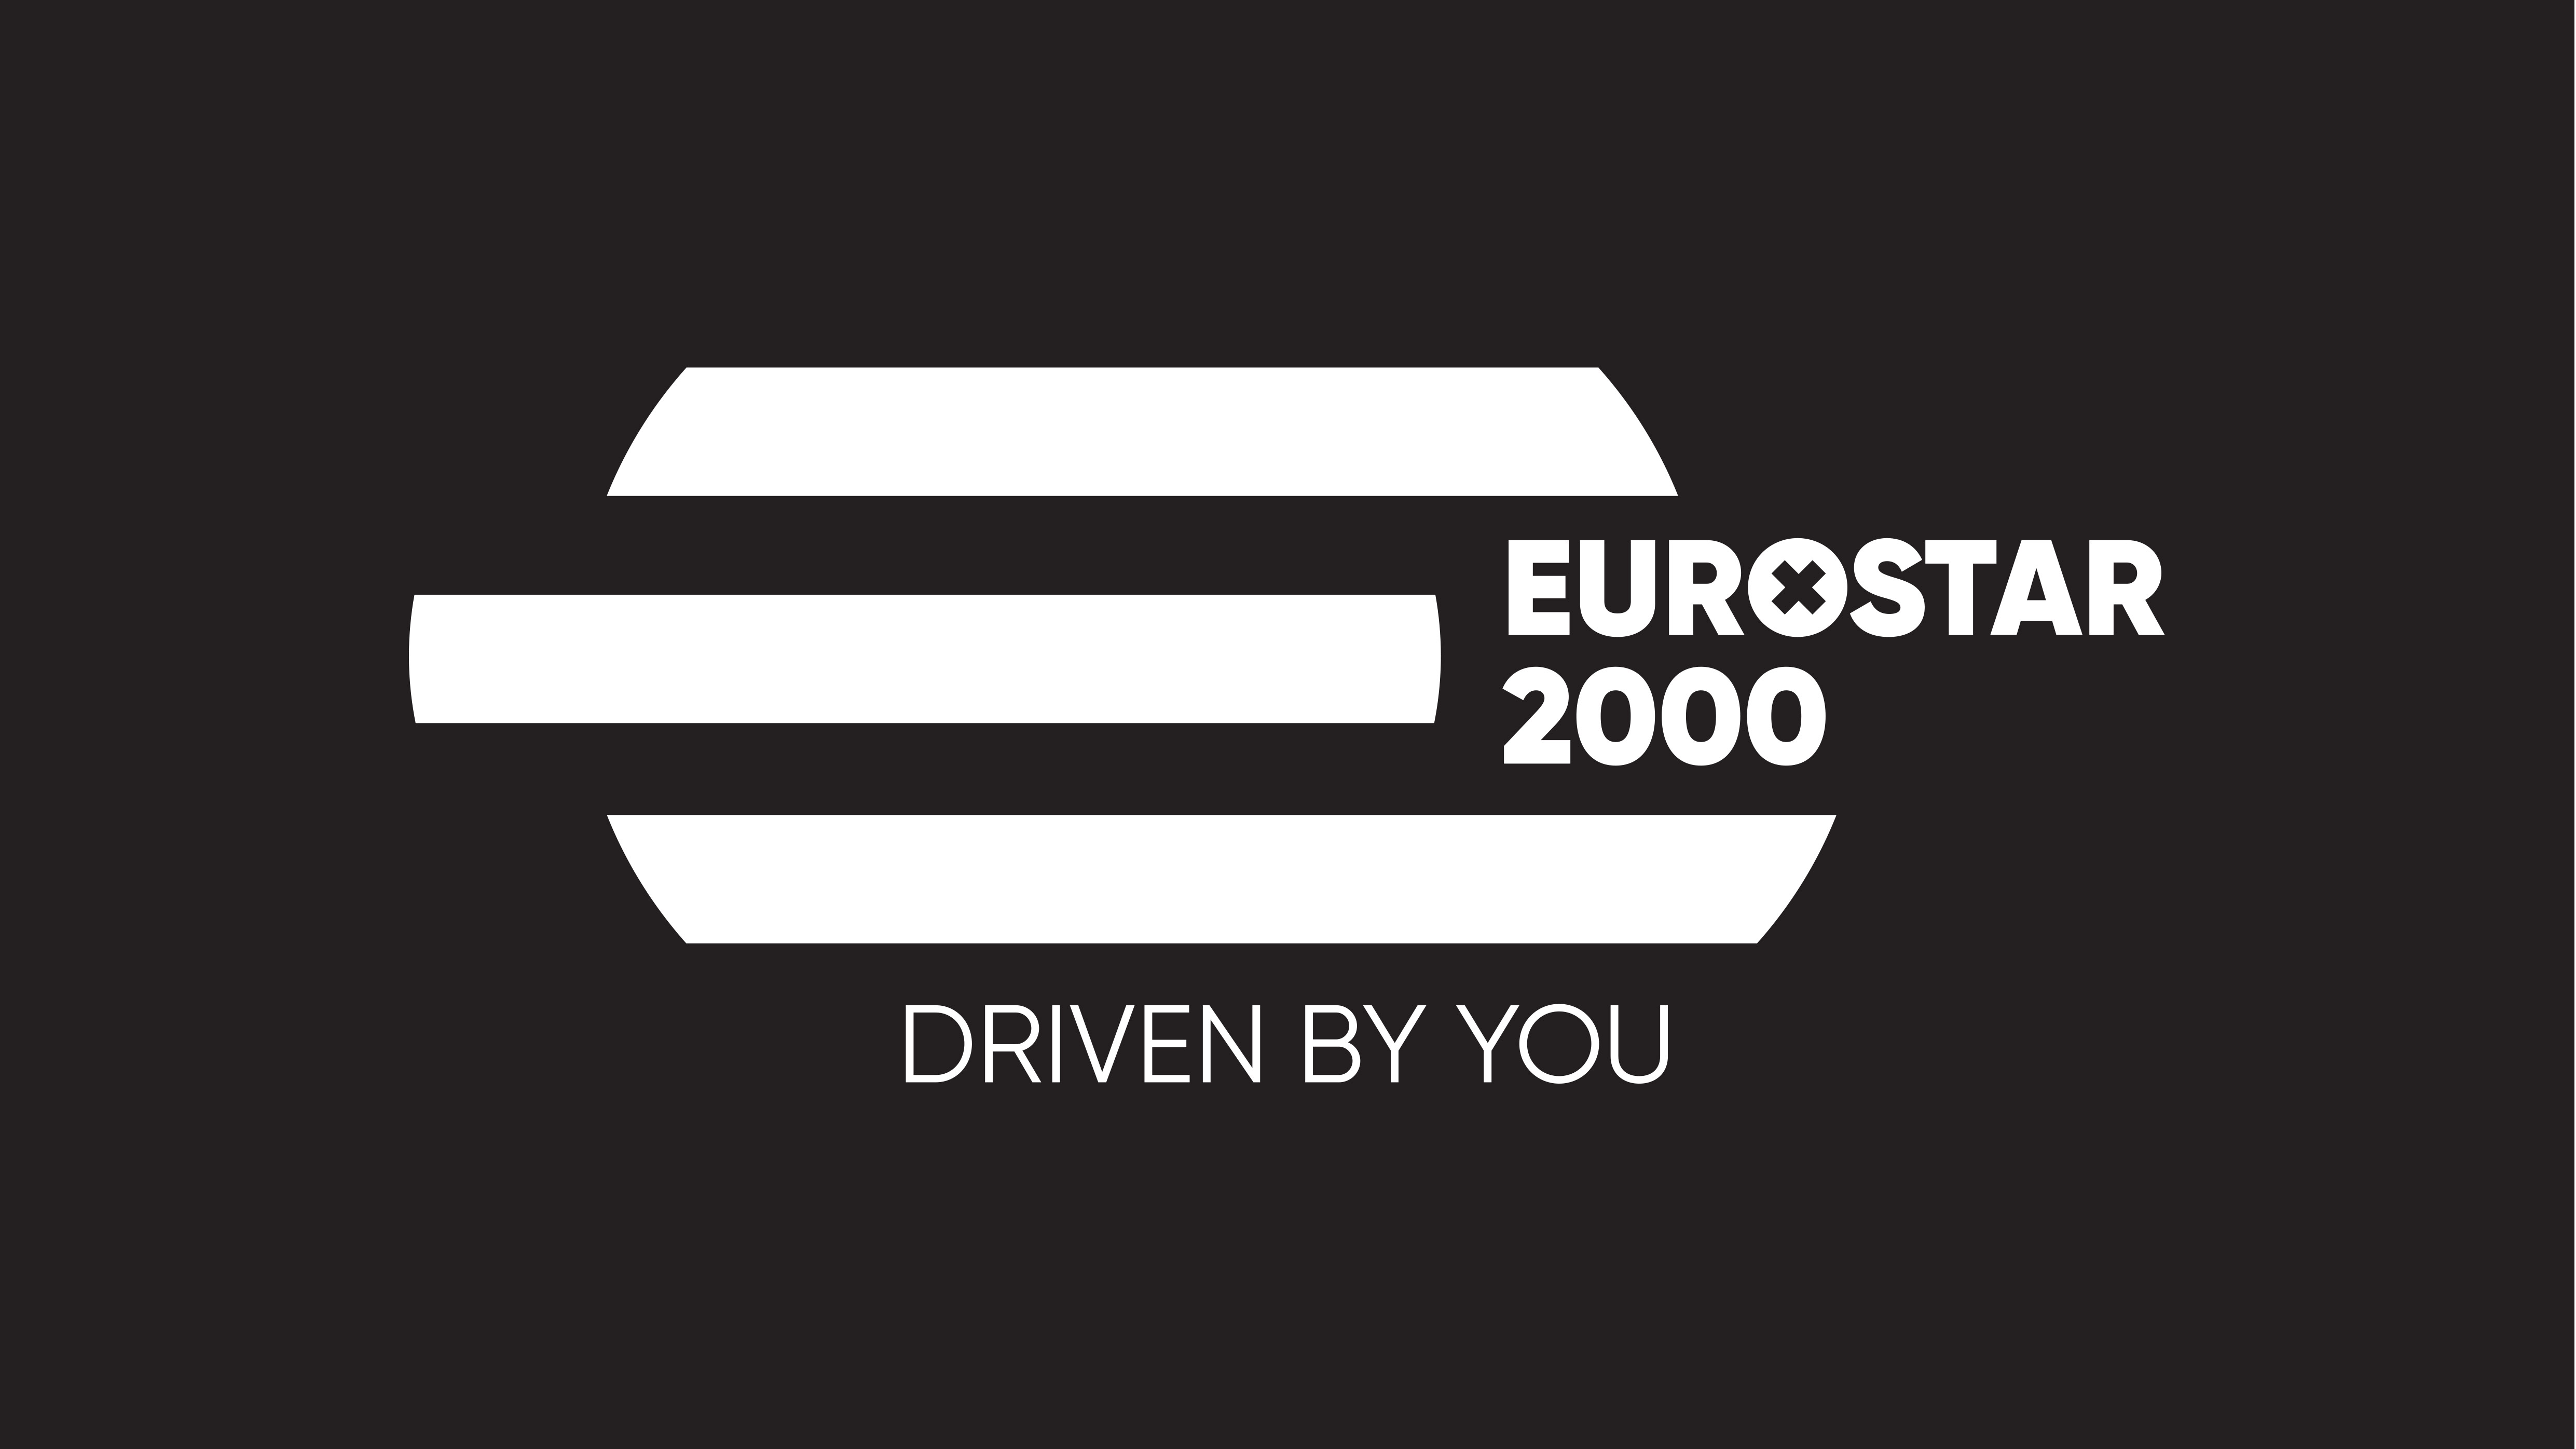 MERCEDES-BENZ EUROSTAR 2000